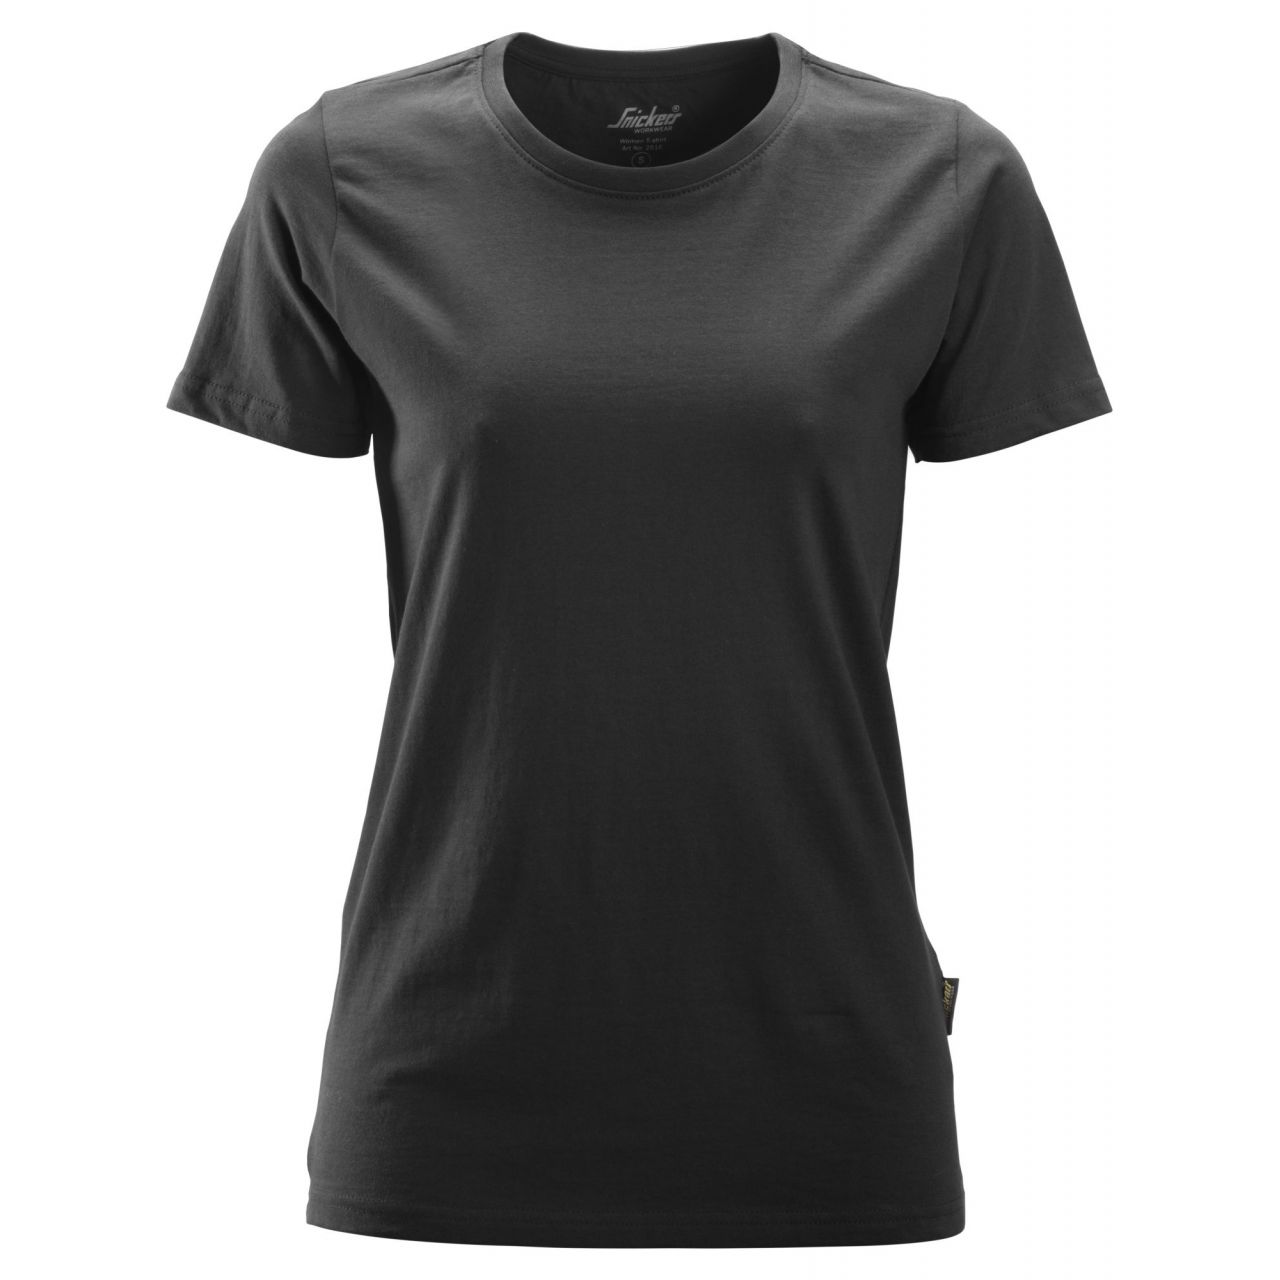 2516 Camiseta Mujer negro talla L